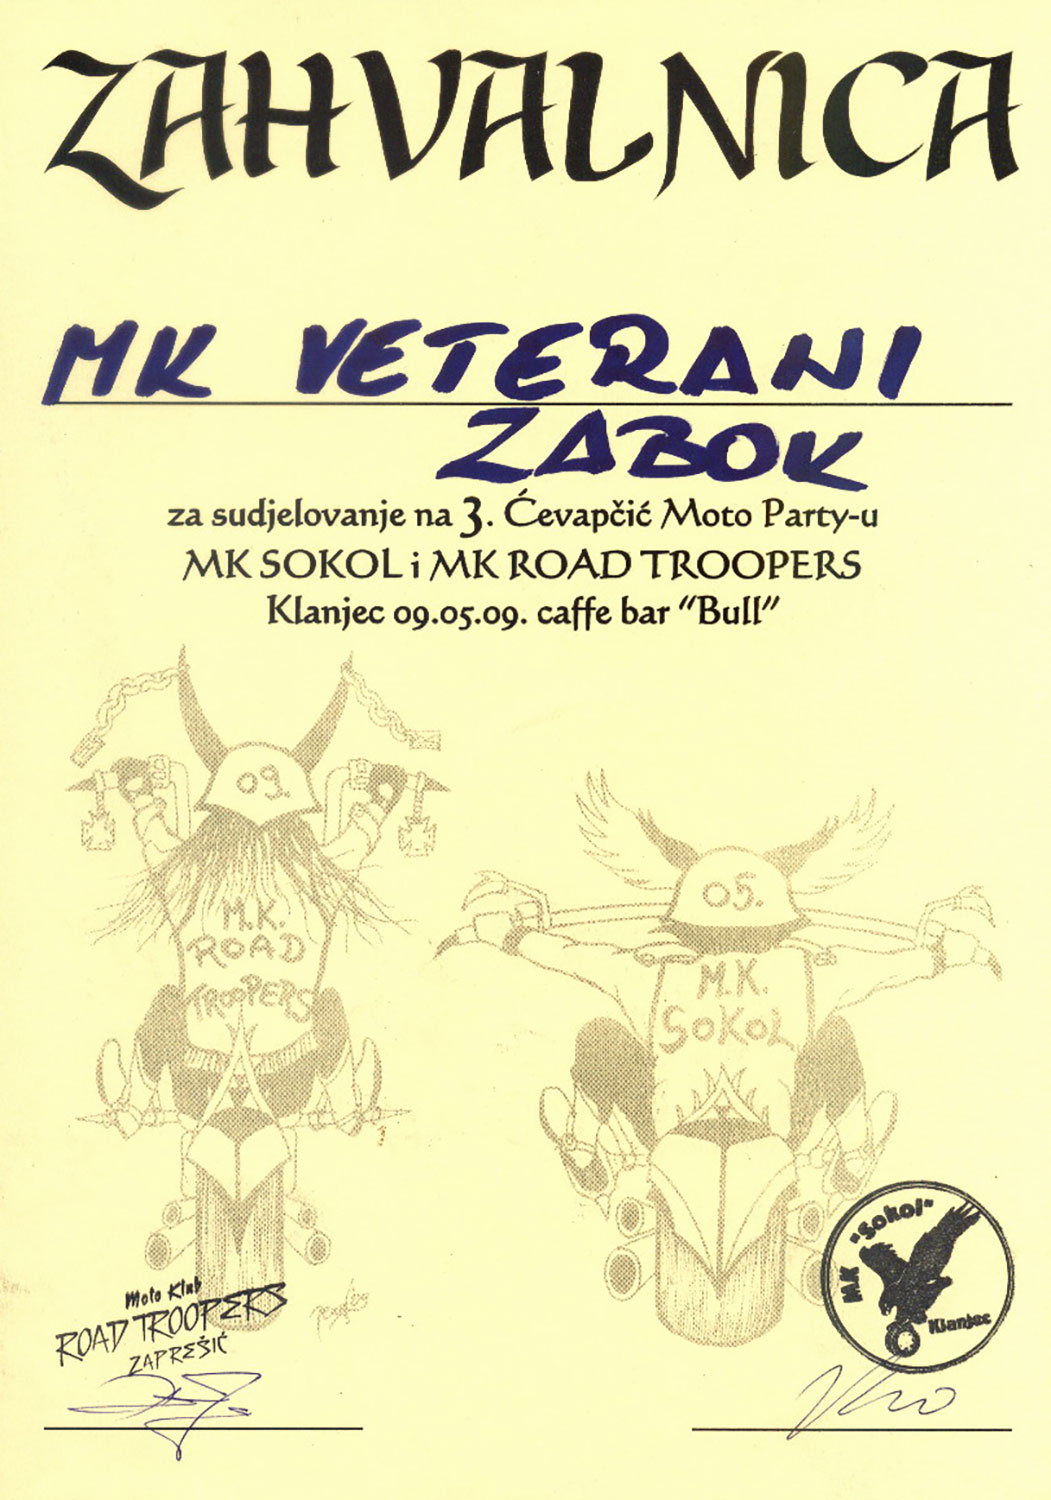 2009 05 09 mk road troopers klanjec mkv zabok